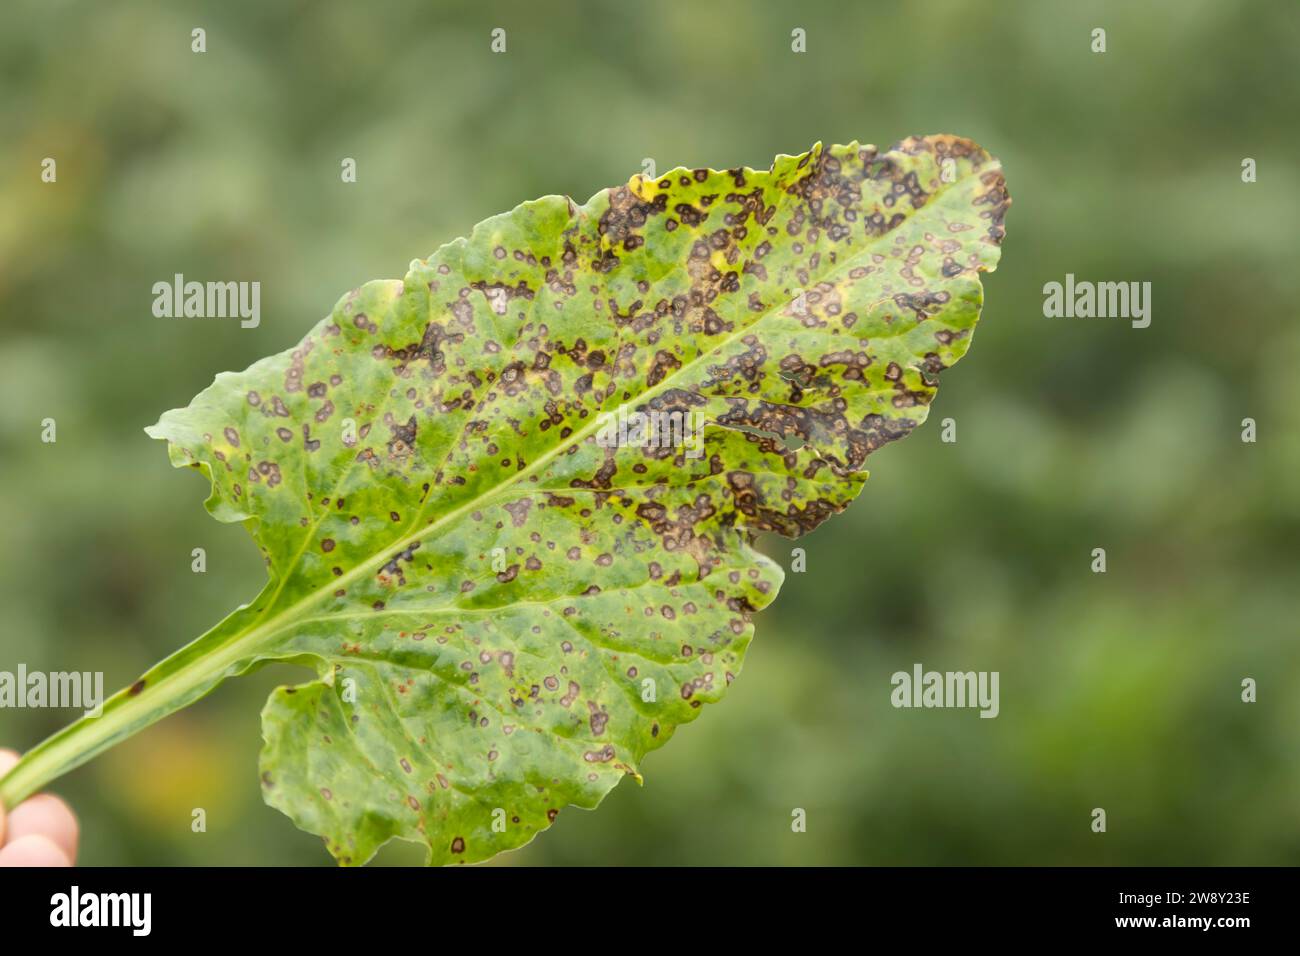 Sugar beet (Beta vulgaris) crop leaf infected with Cercospora (Cercospora beticol) leaf spot foliar disease in an agricultural arable field, England Stock Photo